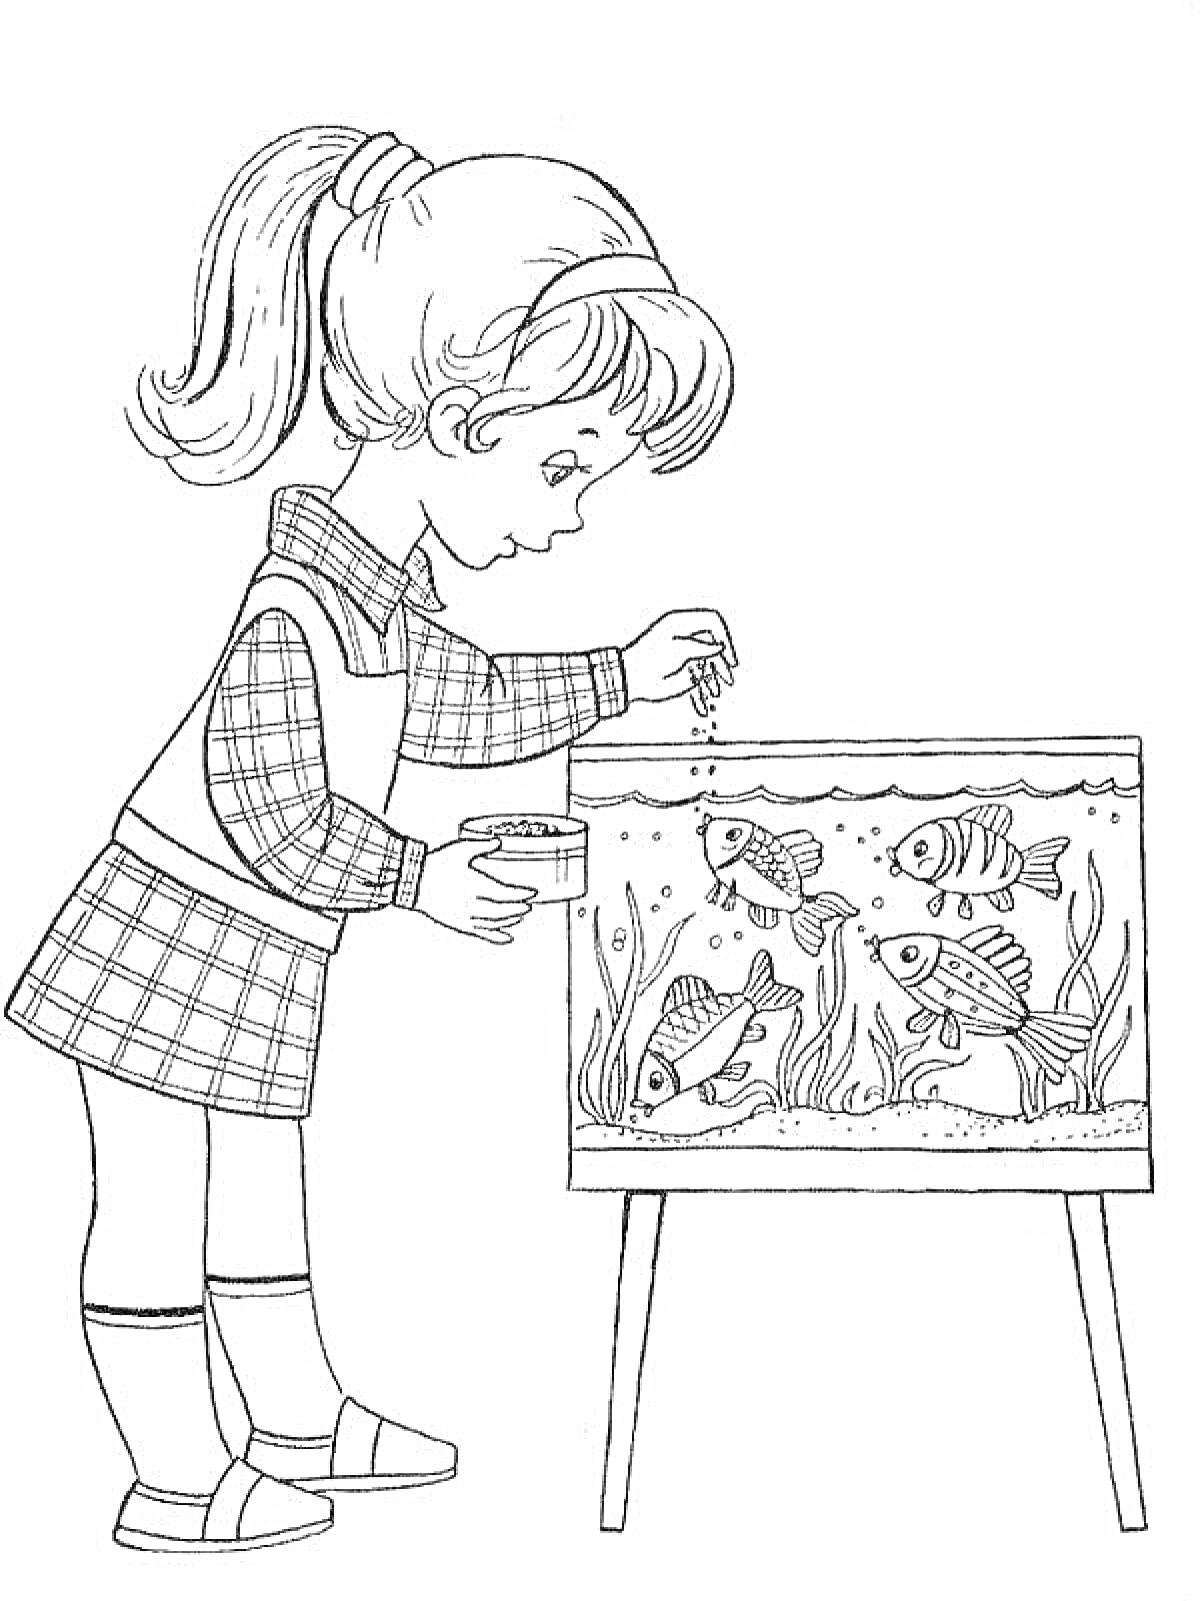 На раскраске изображено: Девочка, Аквариум, Забота, Доброта, Животные